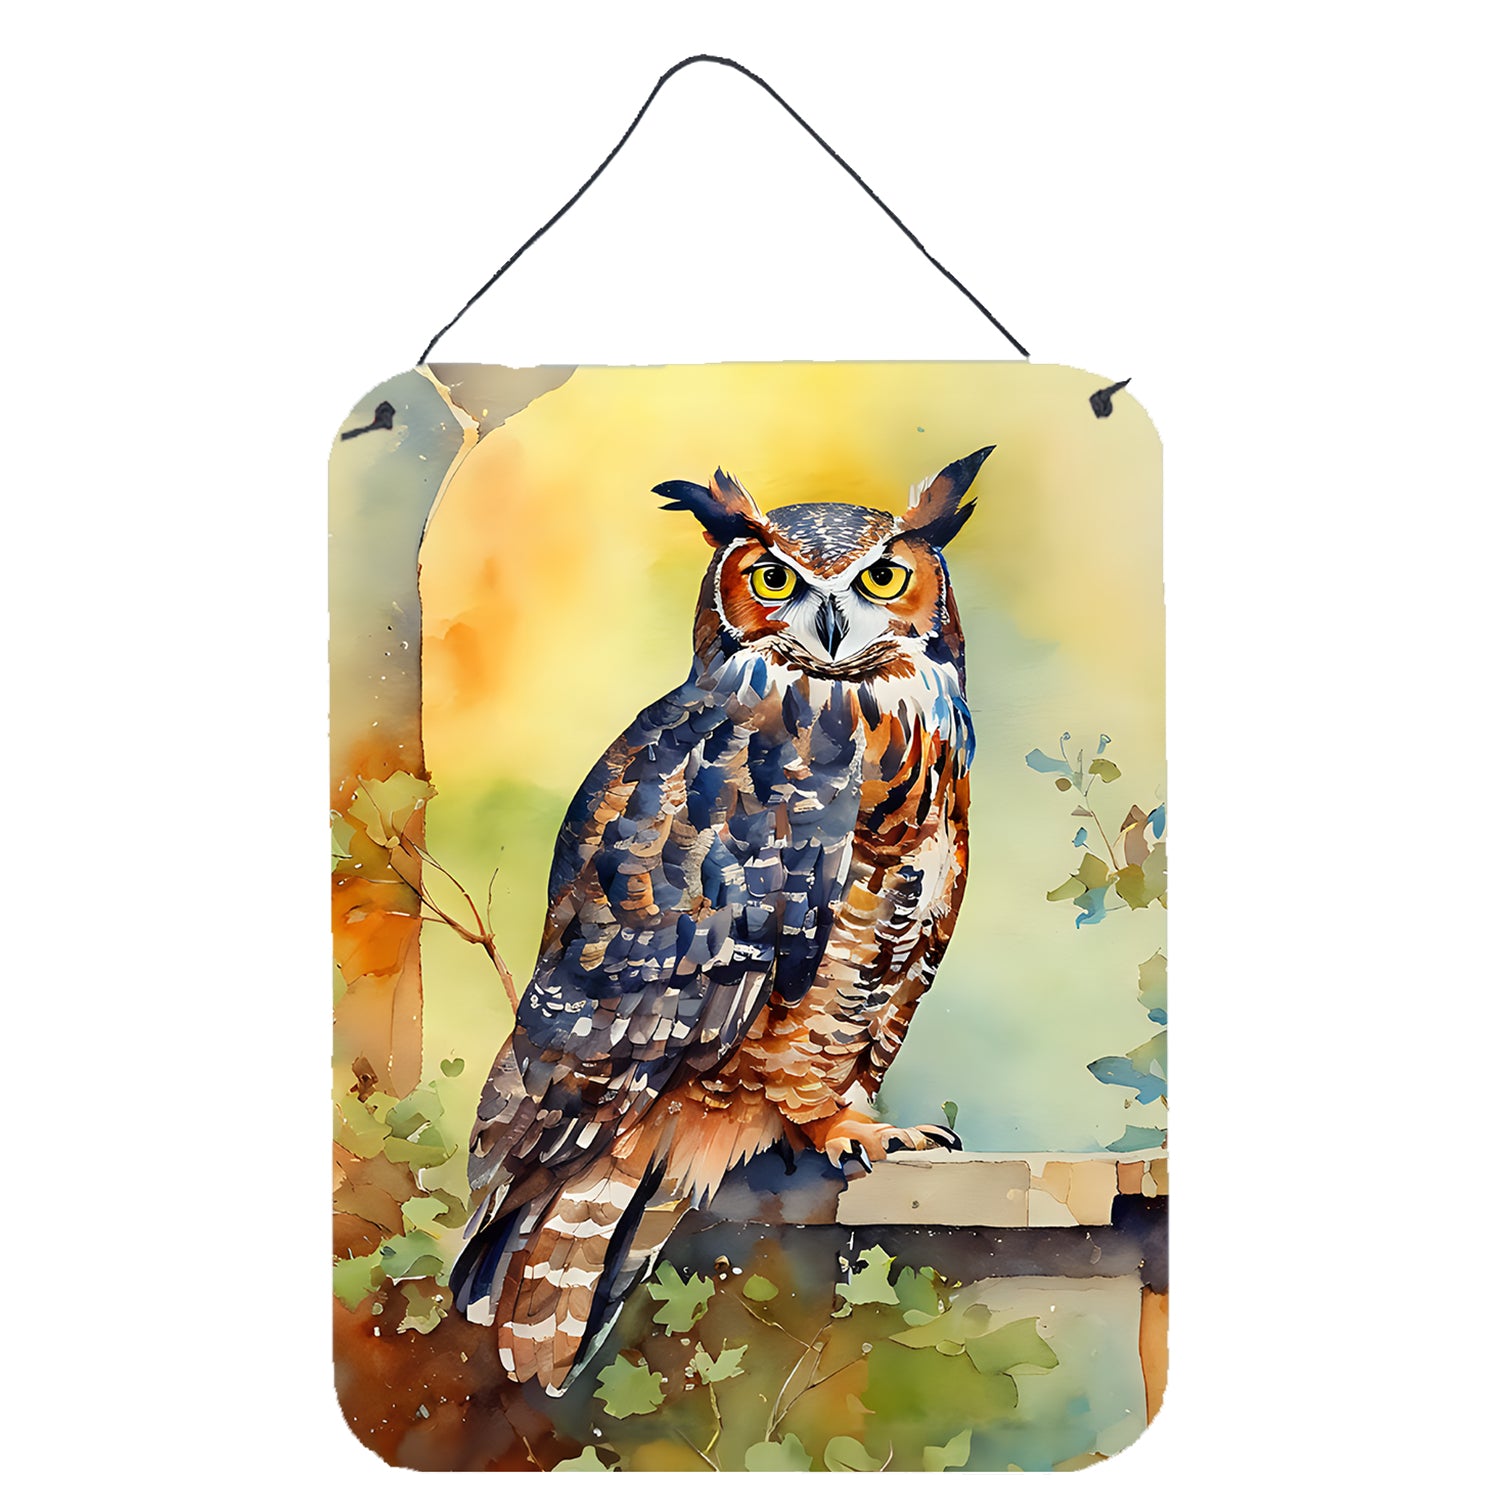 Buy this Great Horned Owl Wall or Door Hanging Prints